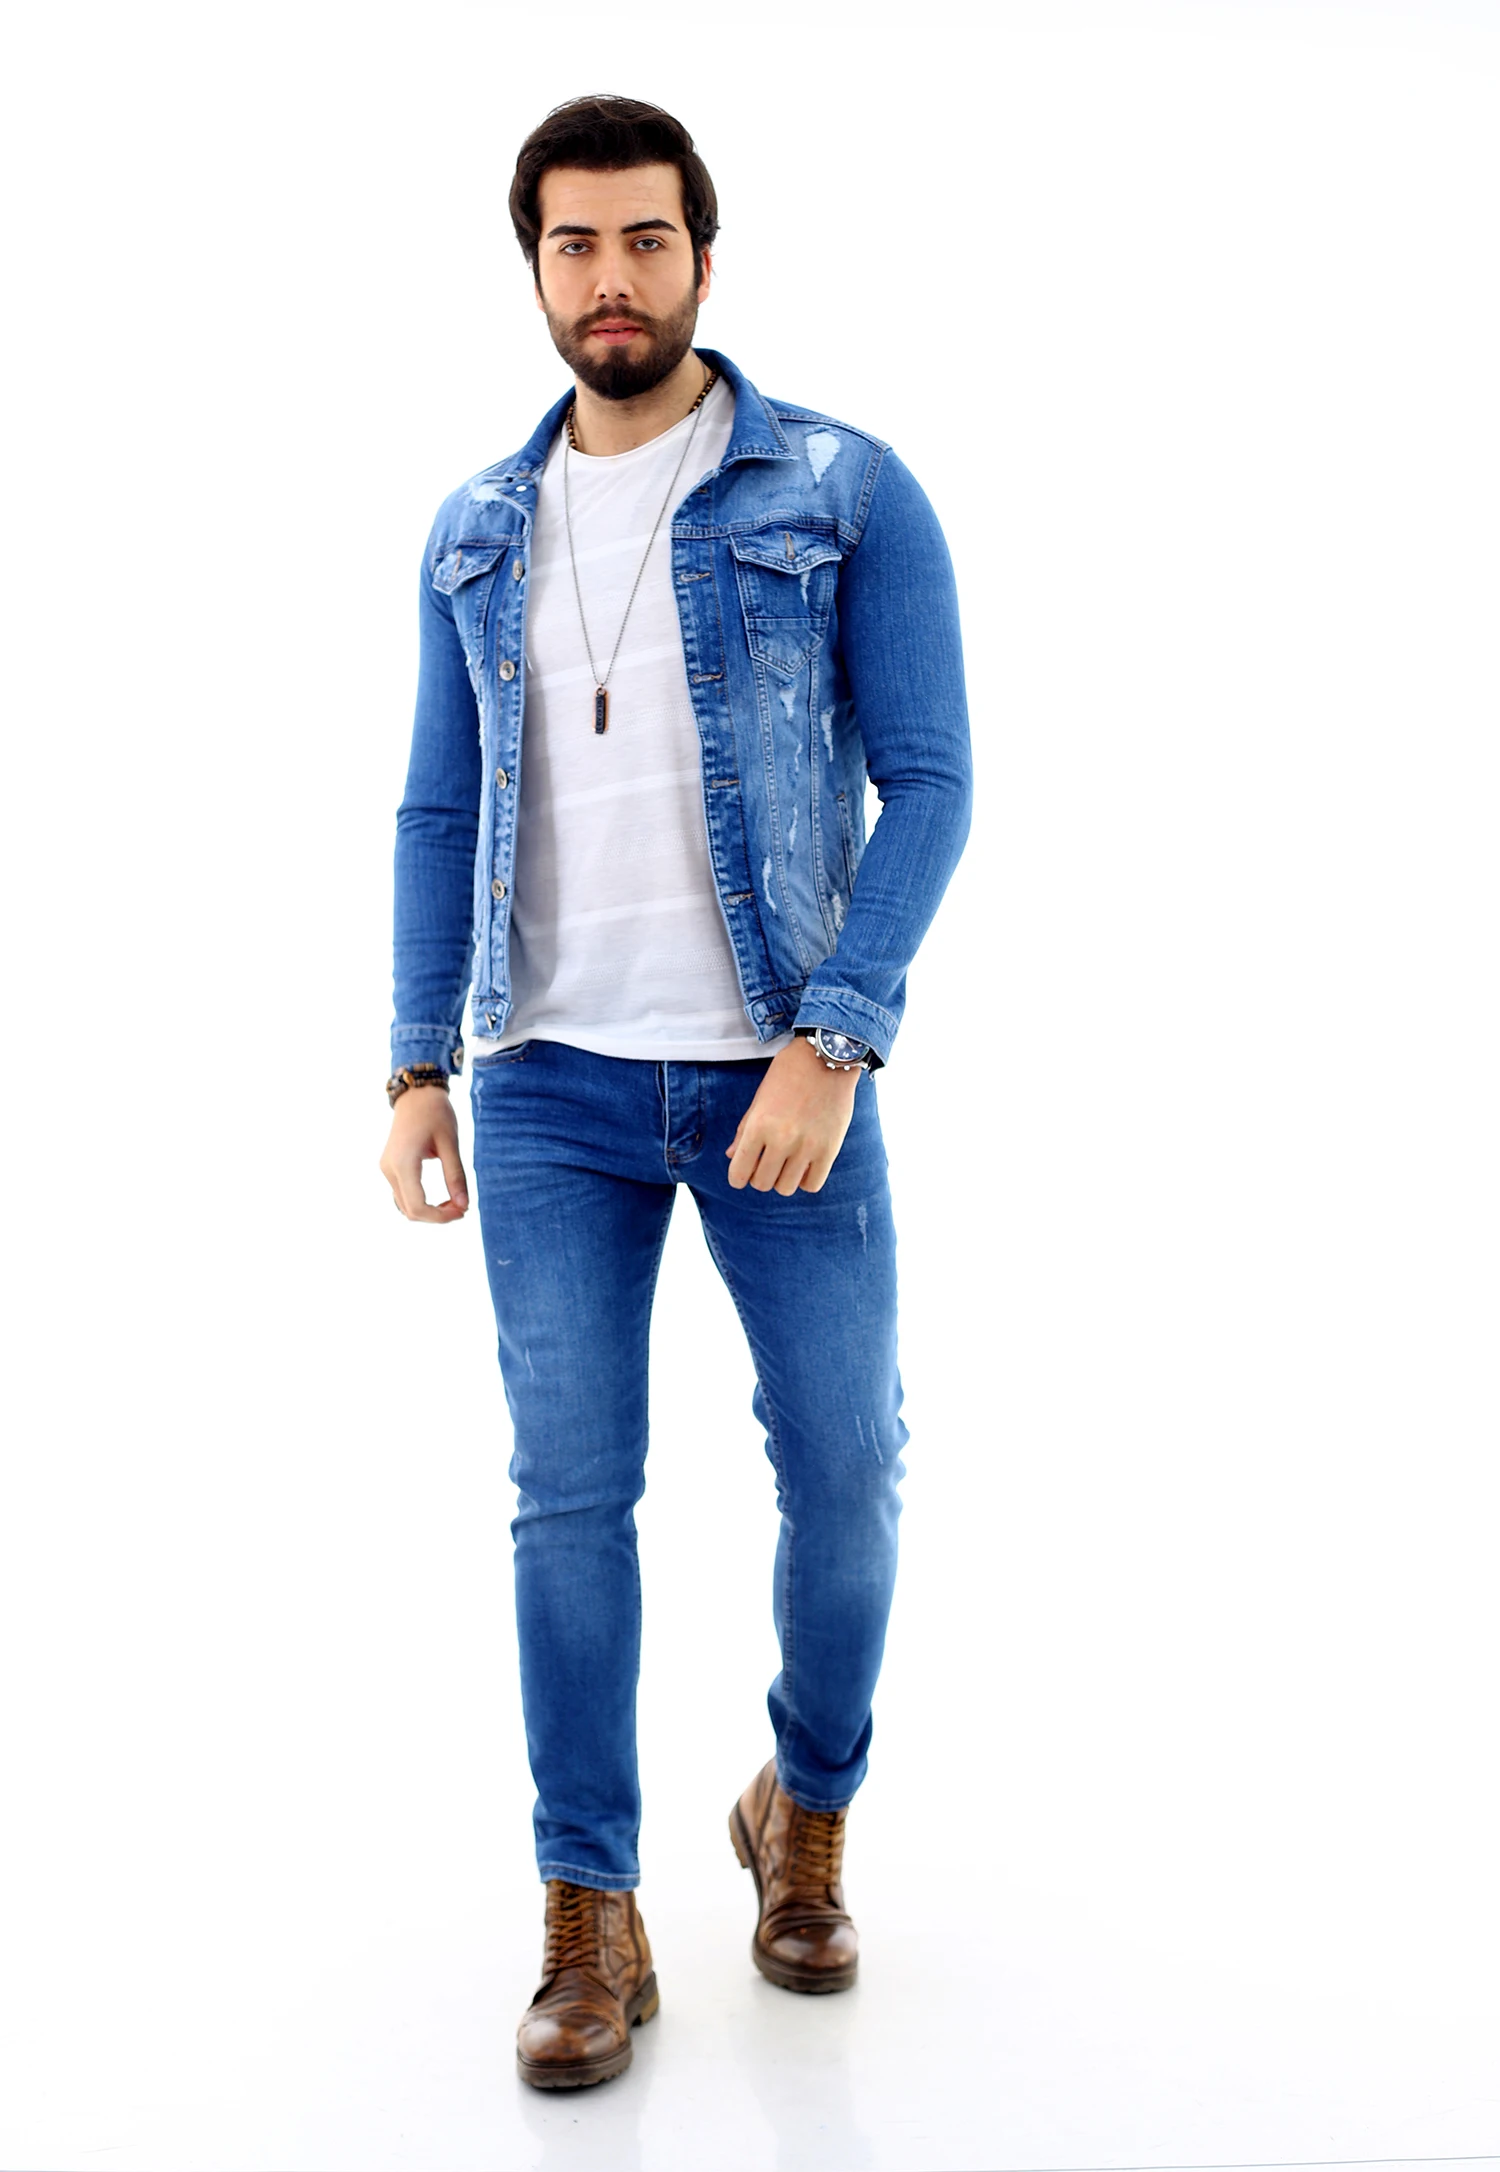 Men's Lycra Denim Jacket Blue 2021 Fashion Men's Jean, Outerwear, cowboy jacket, autumn and winter slim denim jacket casual